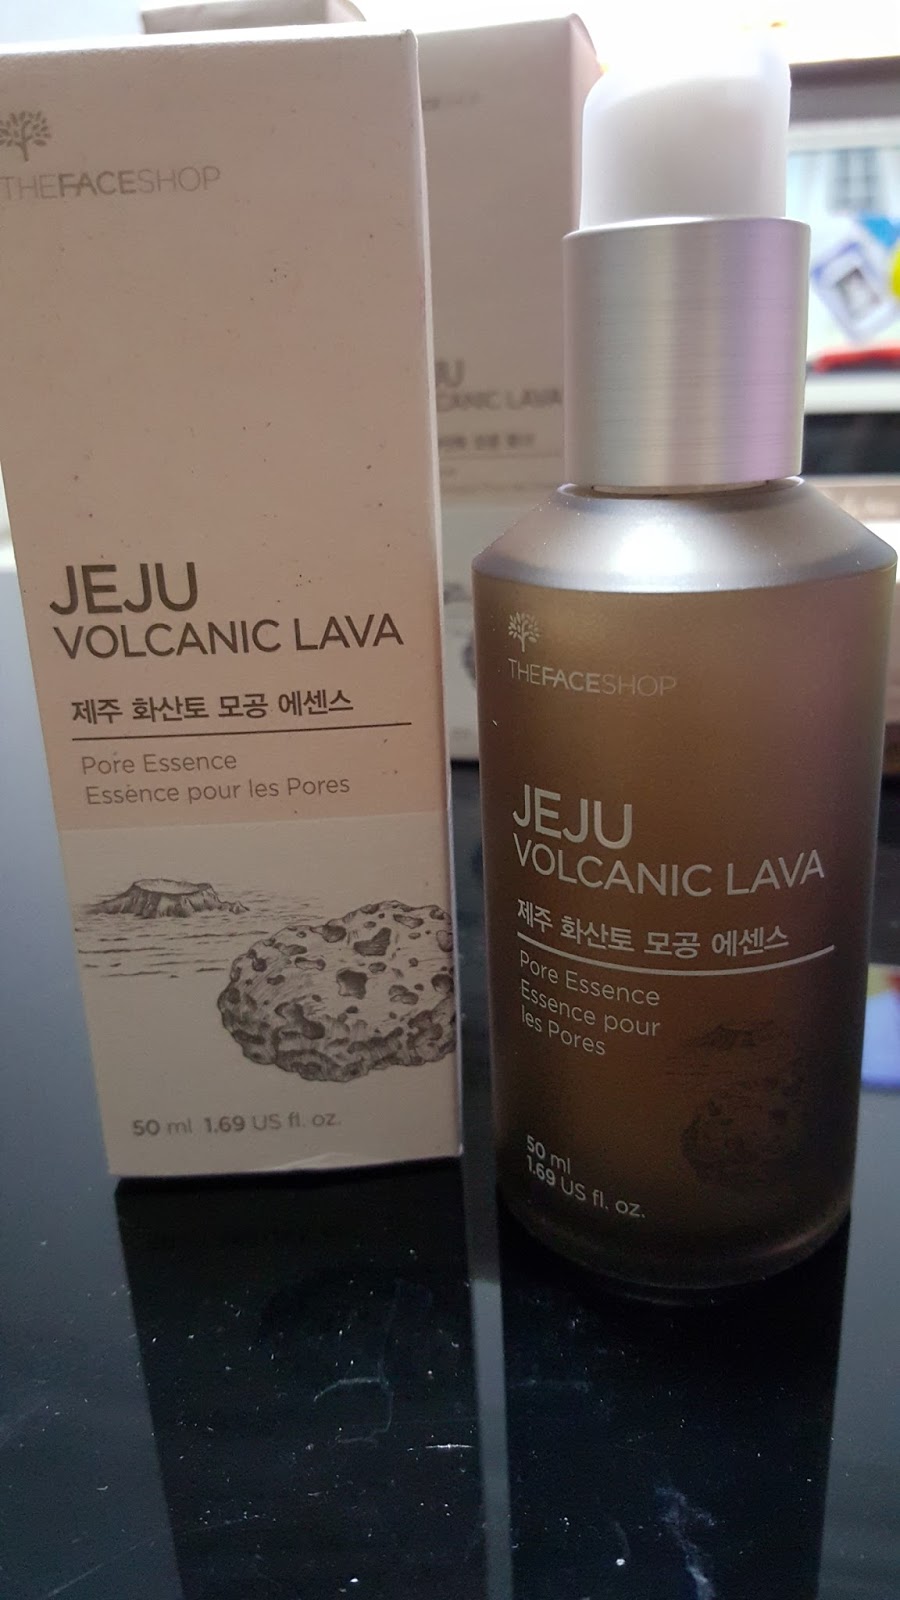 Freshapple: THE FACE SHOP JEJU VOLCANIC LAVA Products